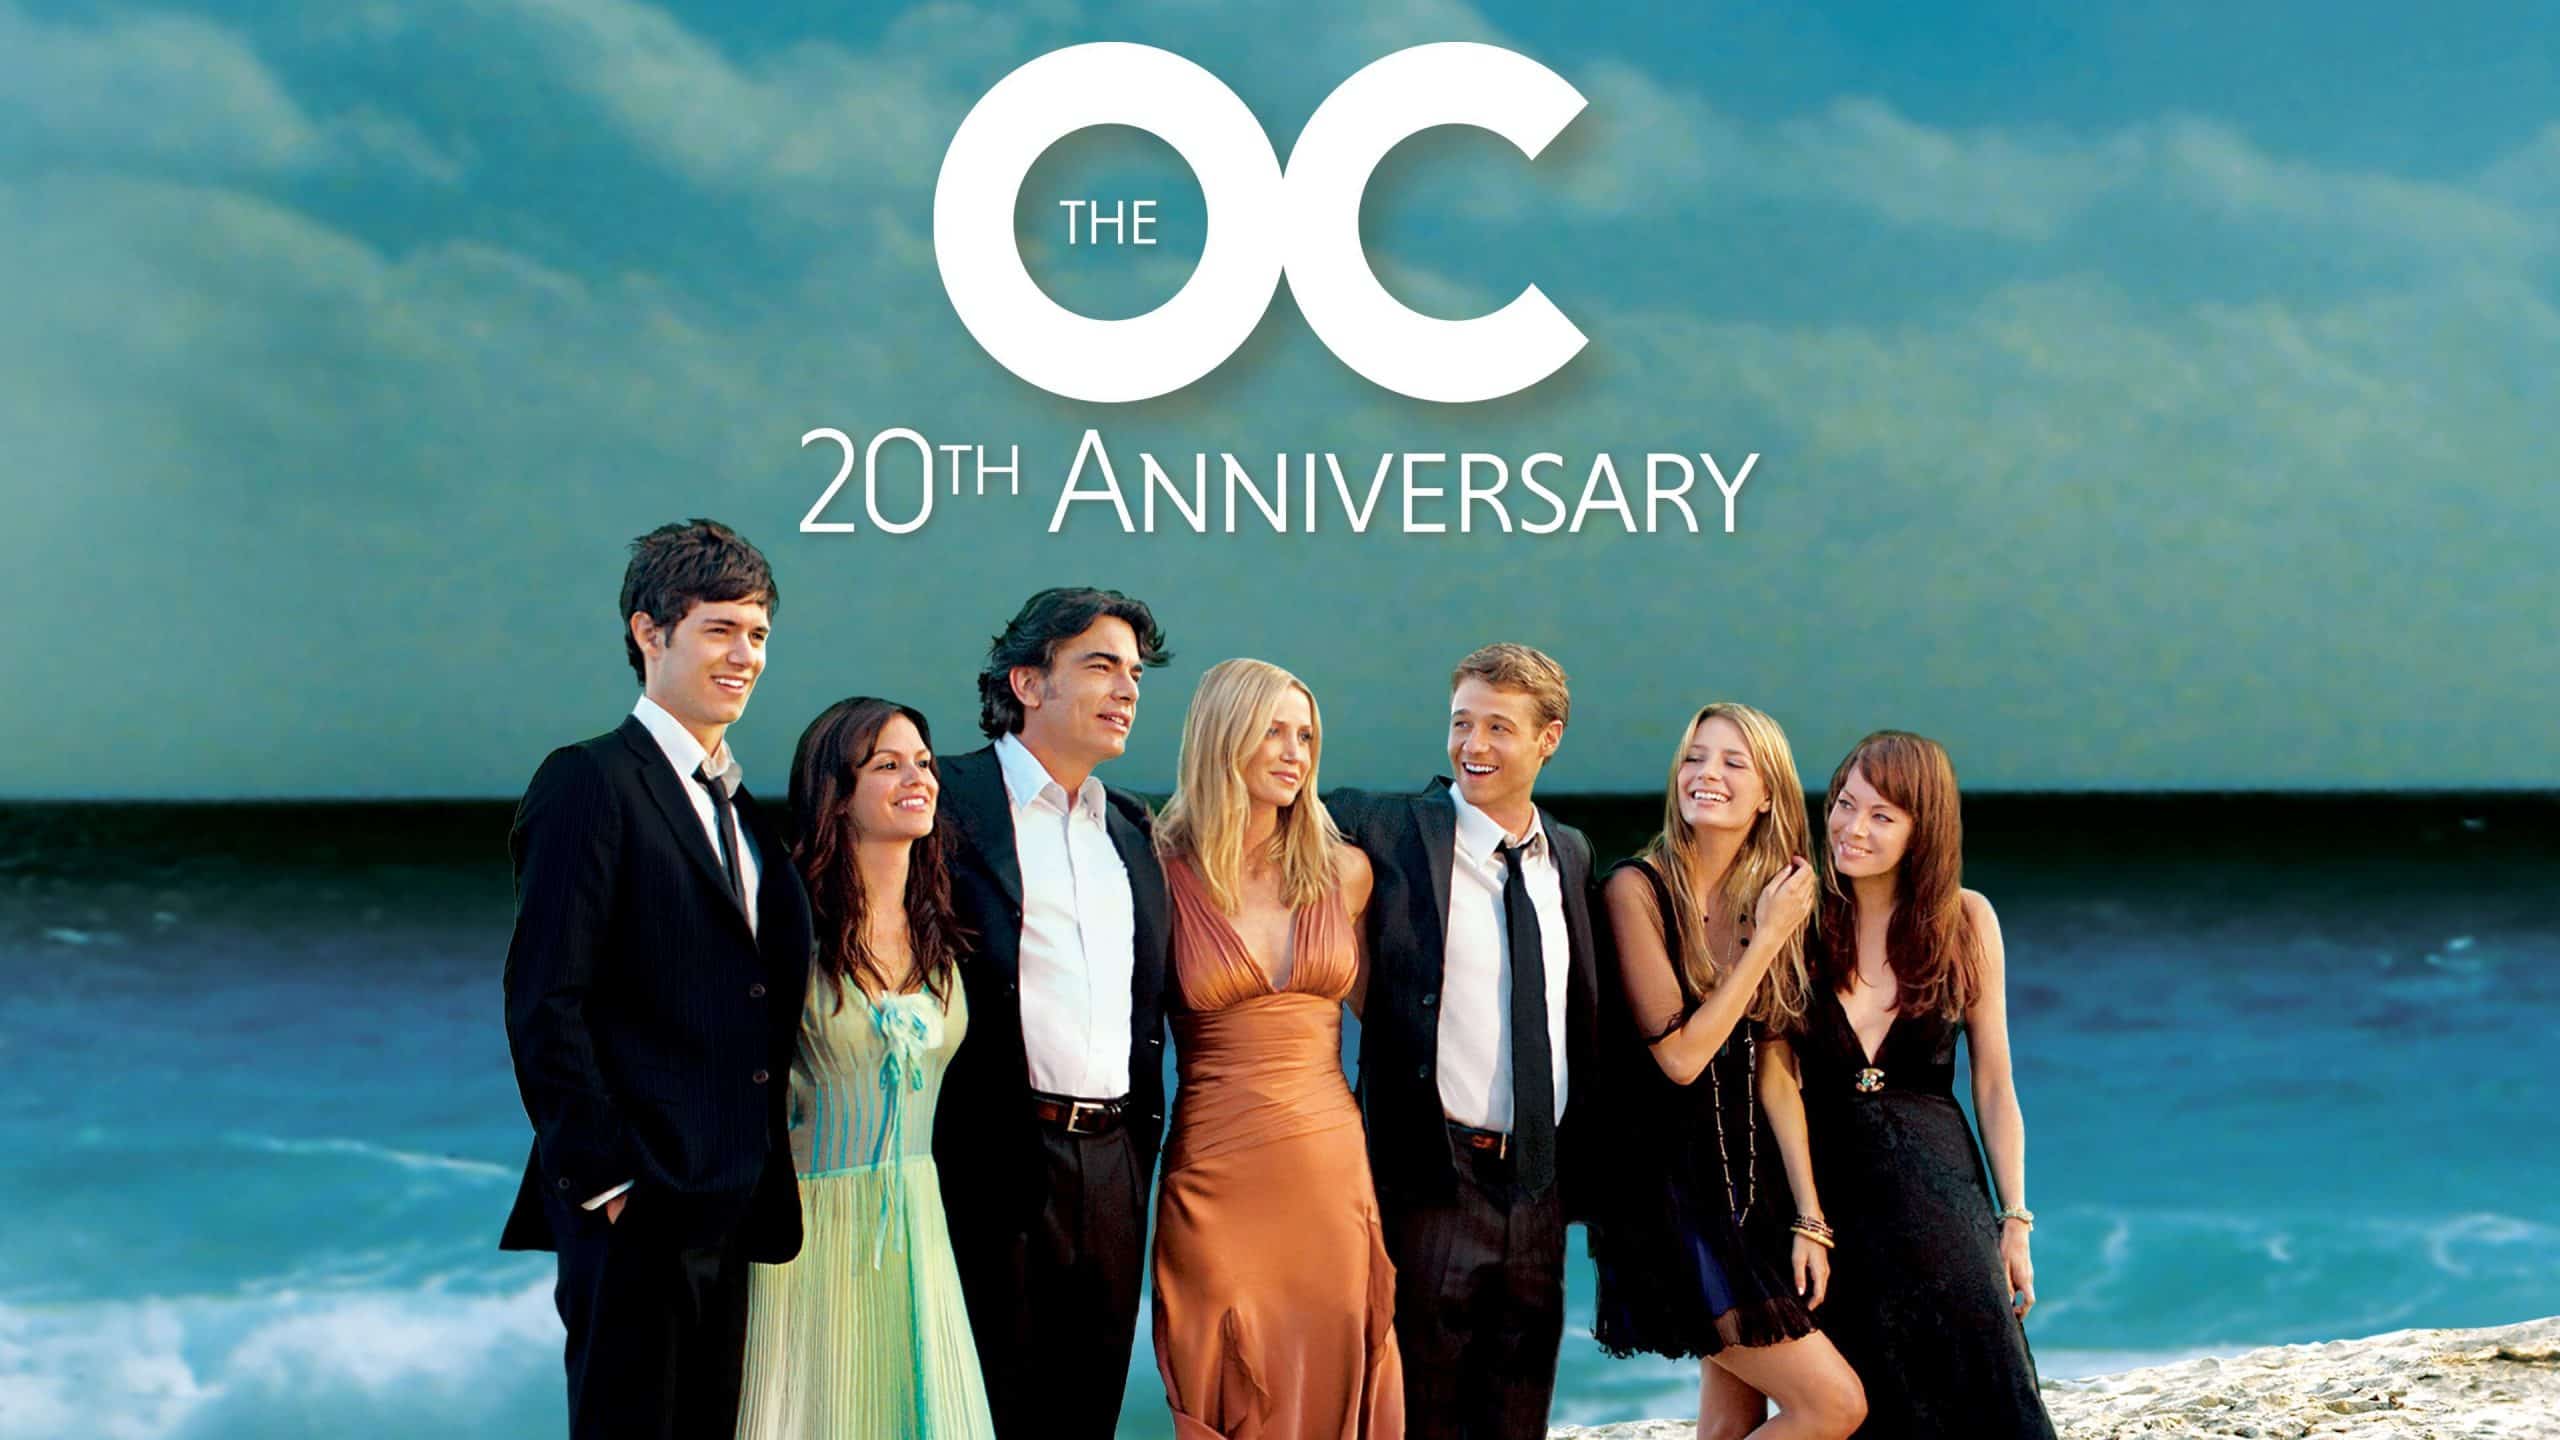 ‘The O.C.’ 20th Anniversary: Rewatching Season 1